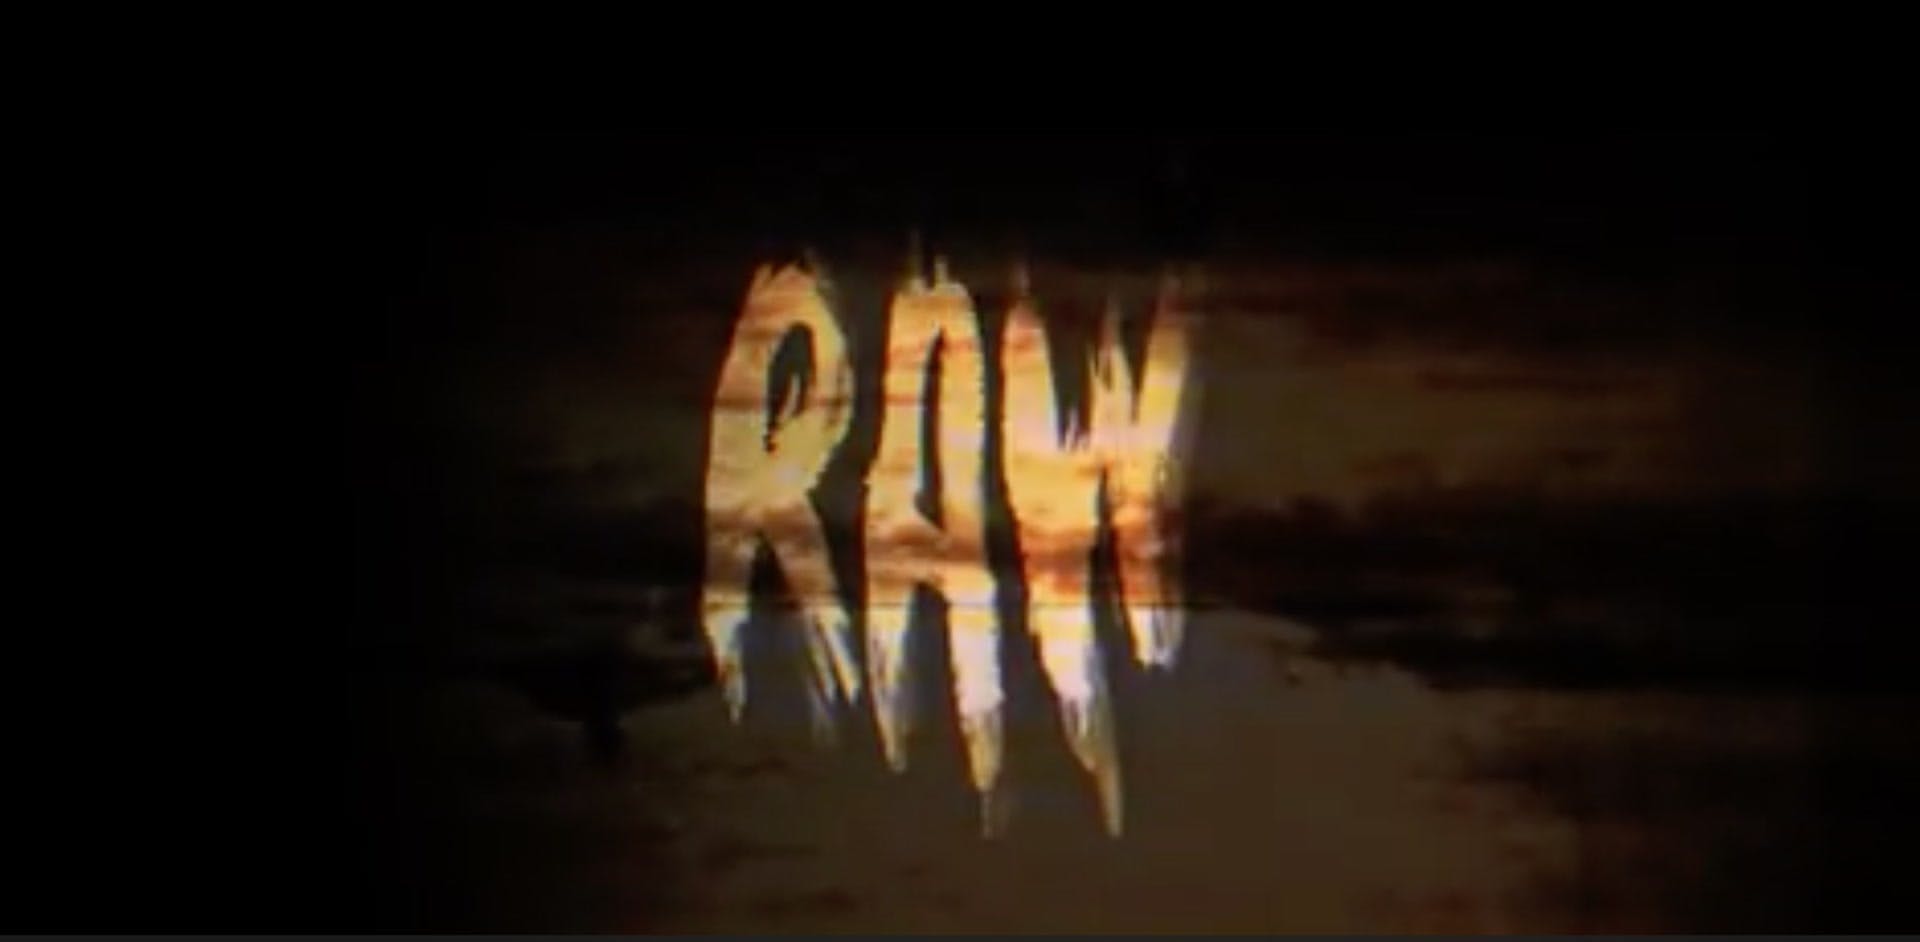 RAW THE MOVIE | Trailer